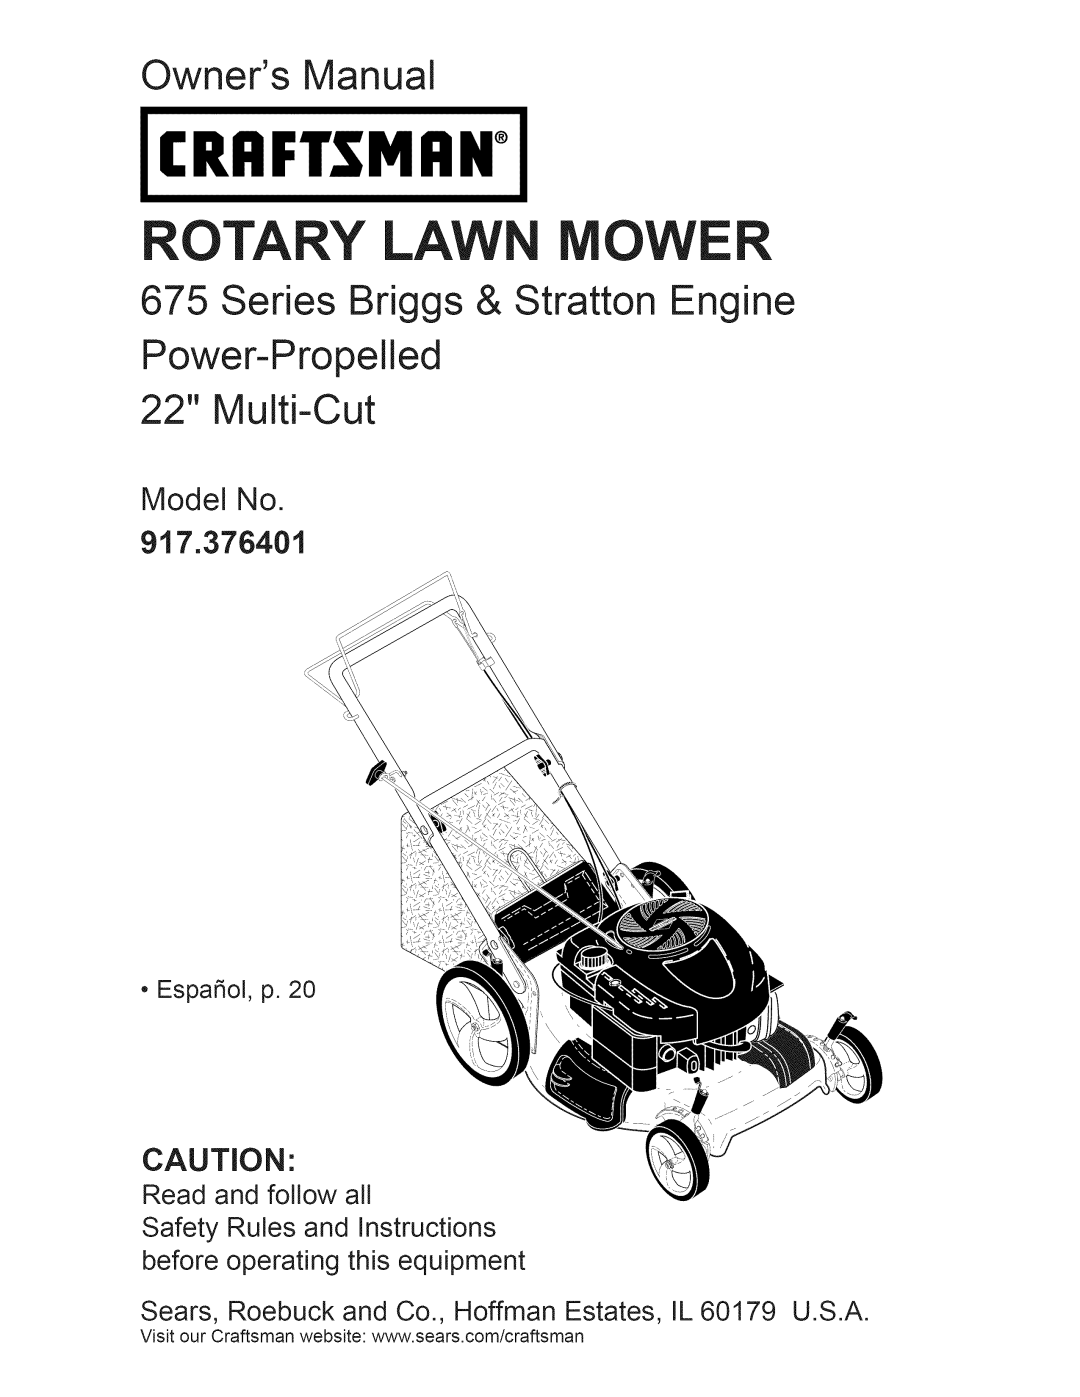 Craftsman owner manual Model No 917.376401, Craftsman, Rotary Lawn Mower, Series Briggs & Stratton Engine 